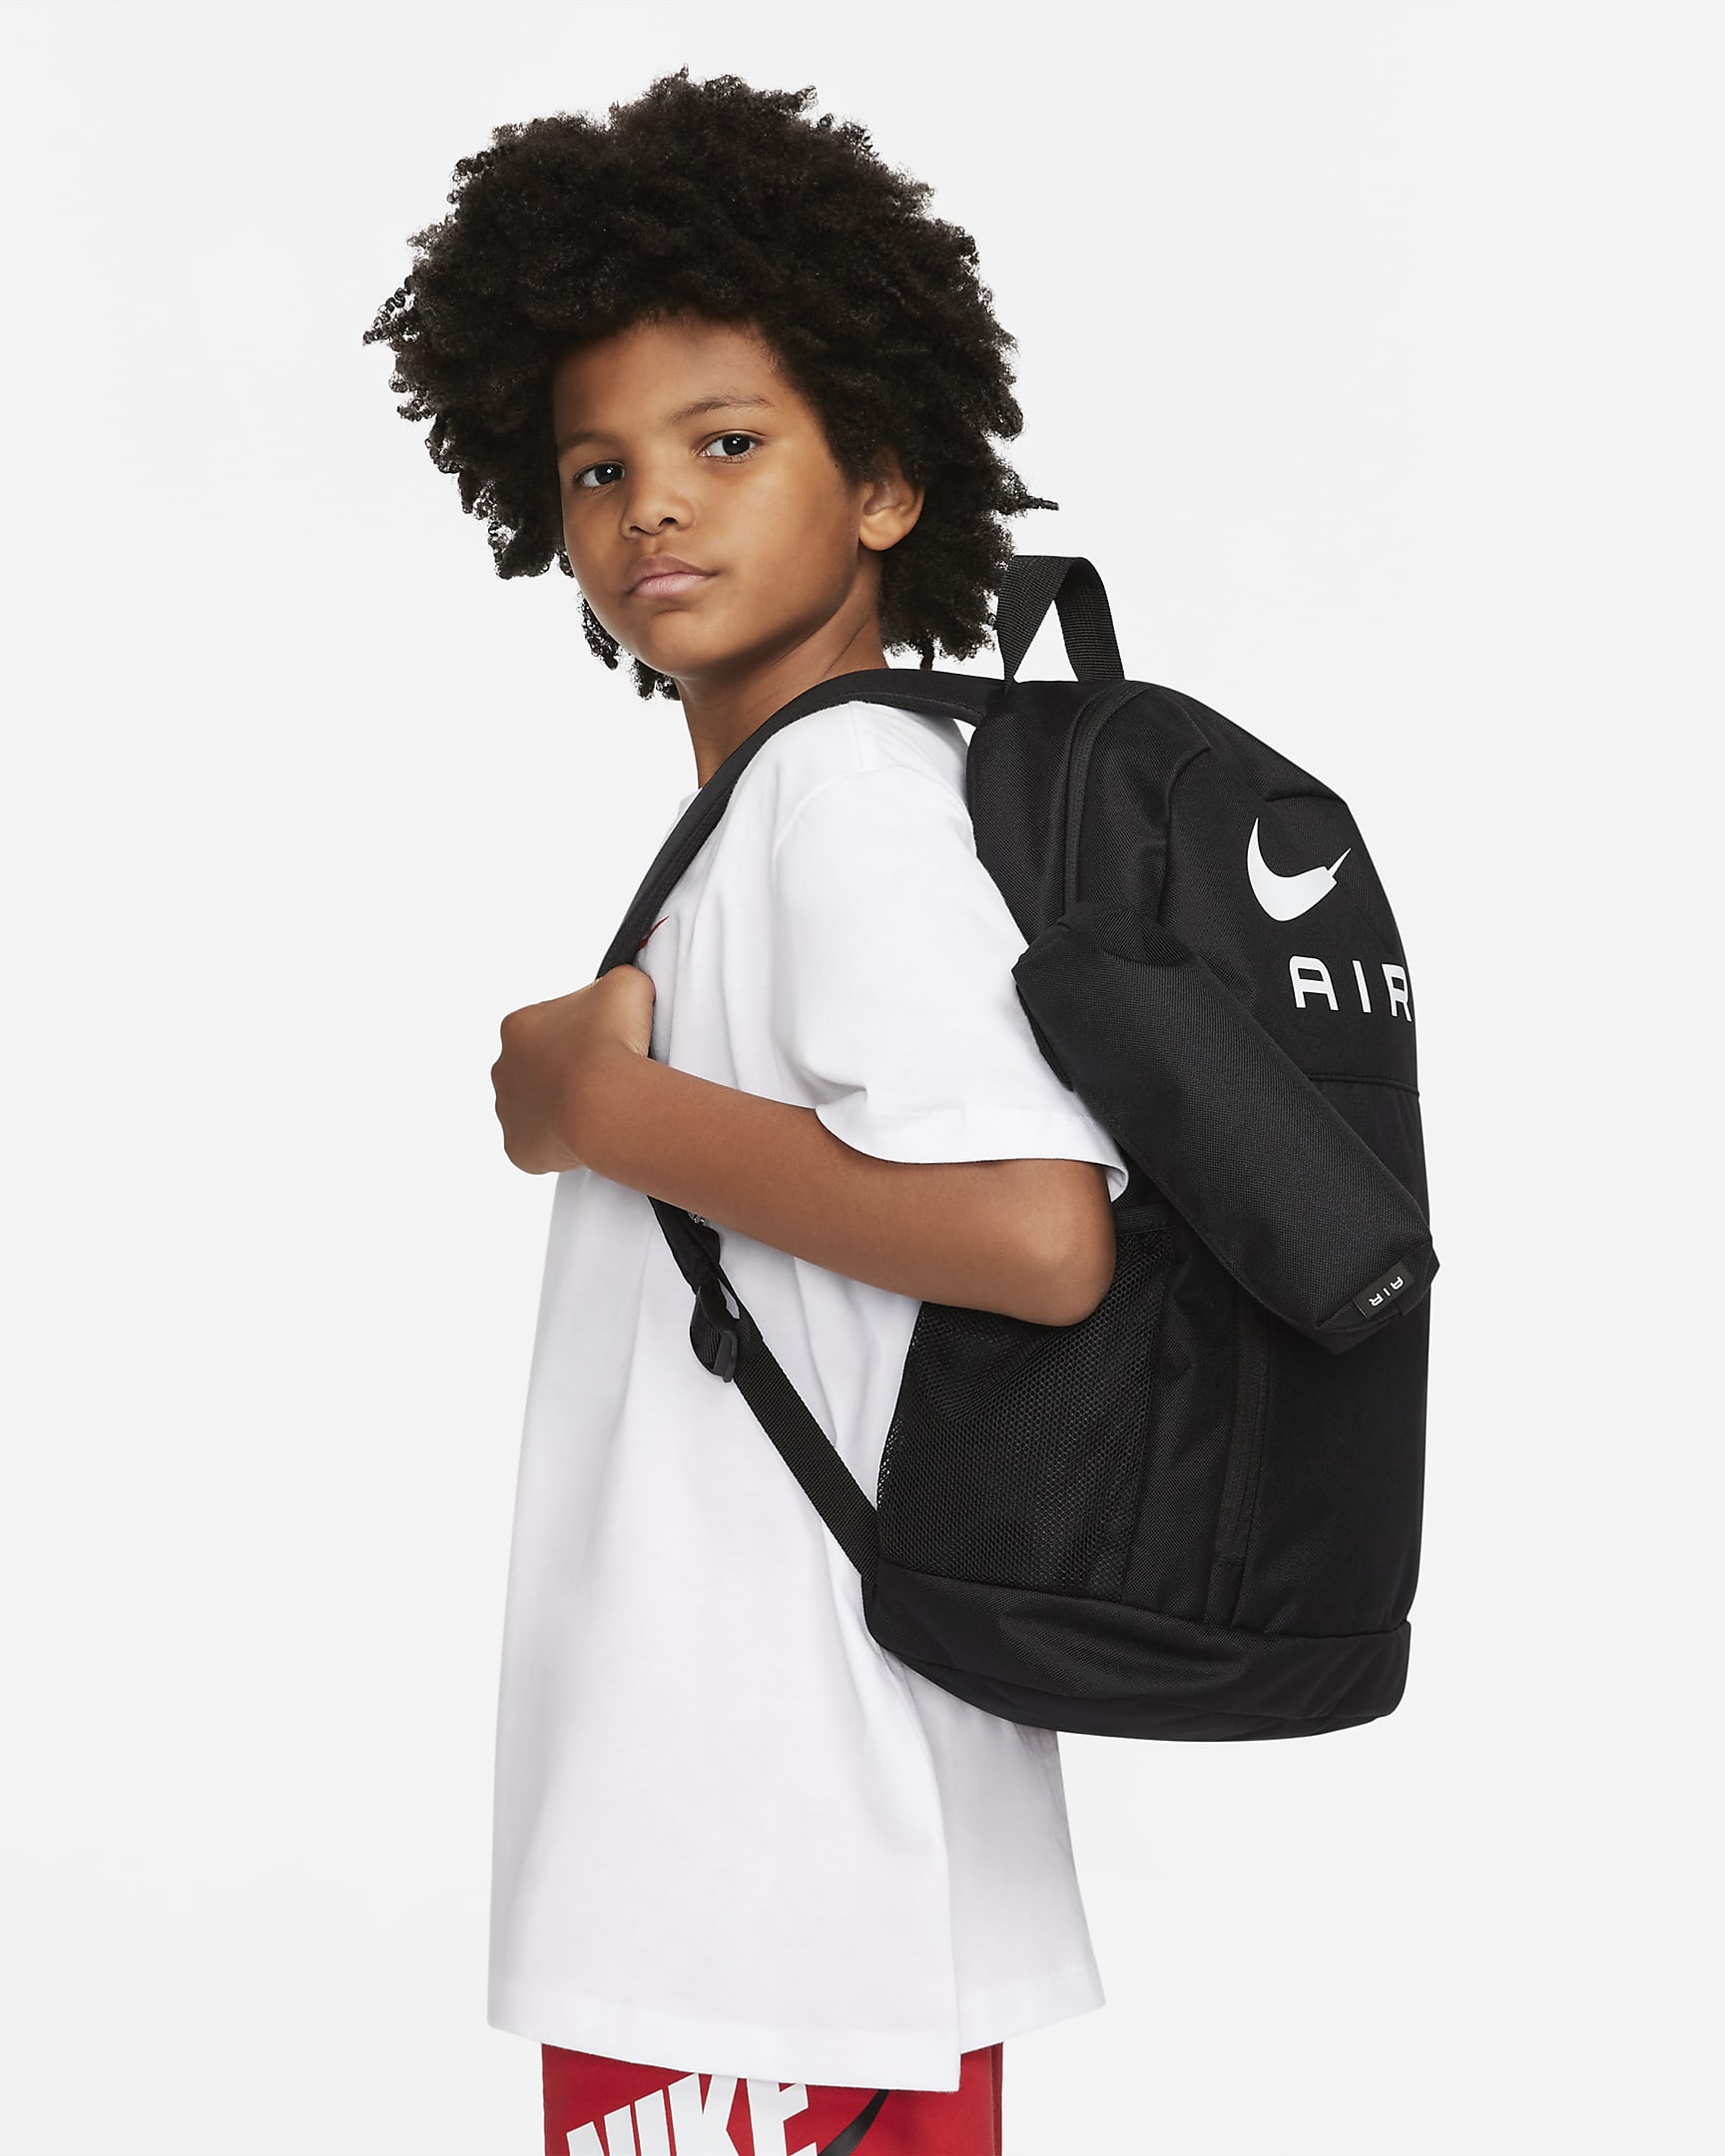 Nike Kids' Backpack (20L) - Black/Black/White